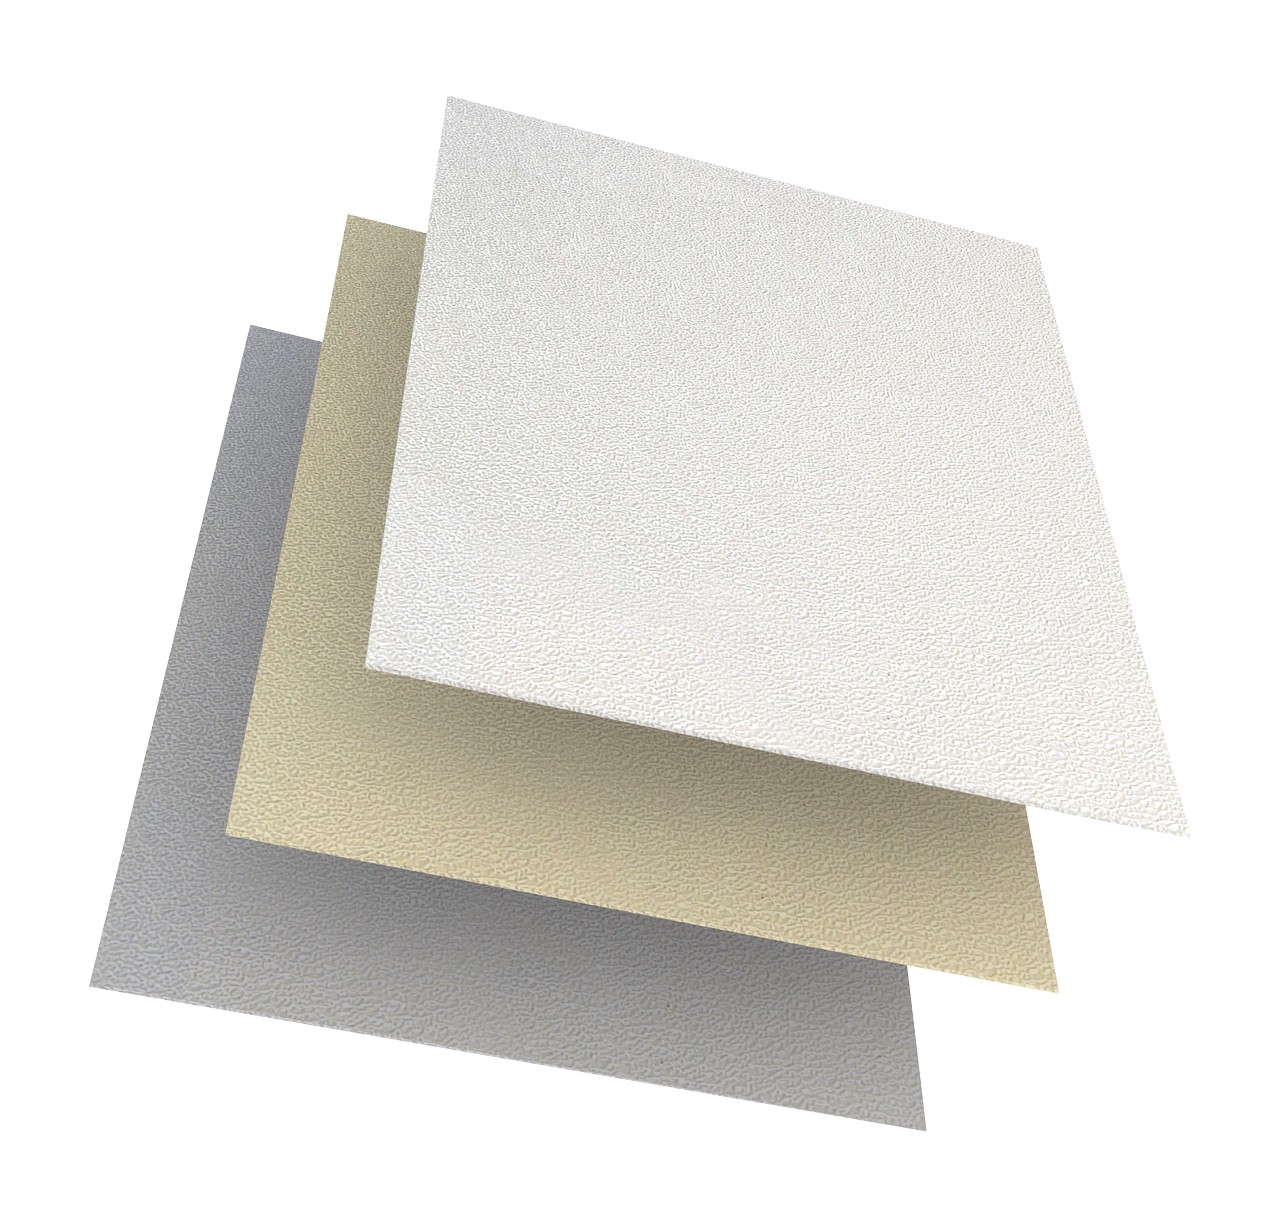 FRP liner panel shades